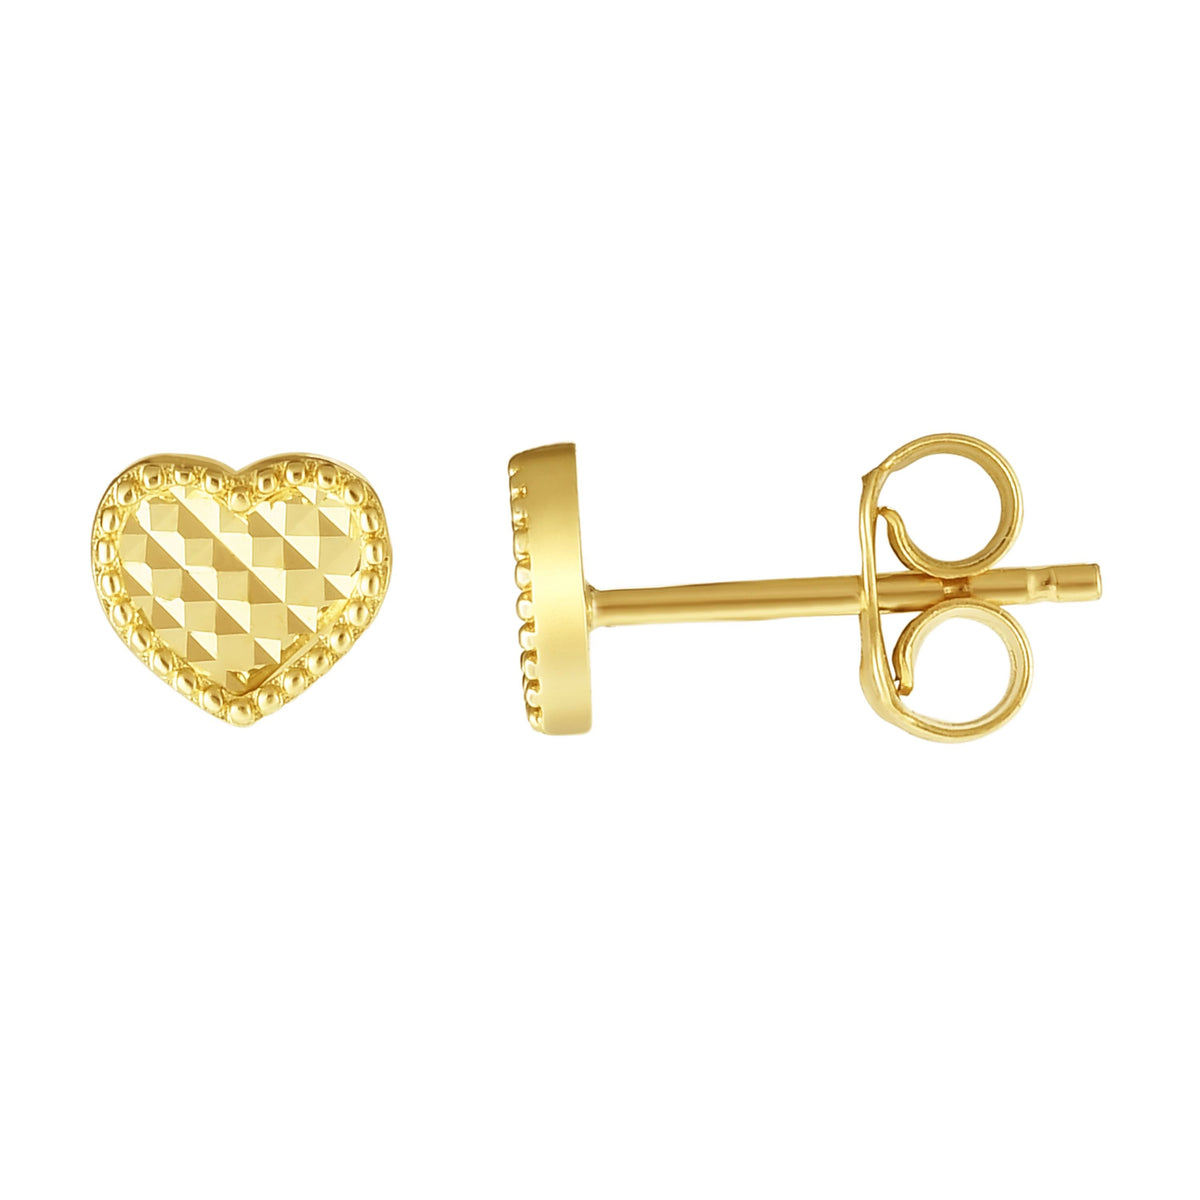 14k Yellow Gold Heart Stud Earrings fine designer jewelry for men and women